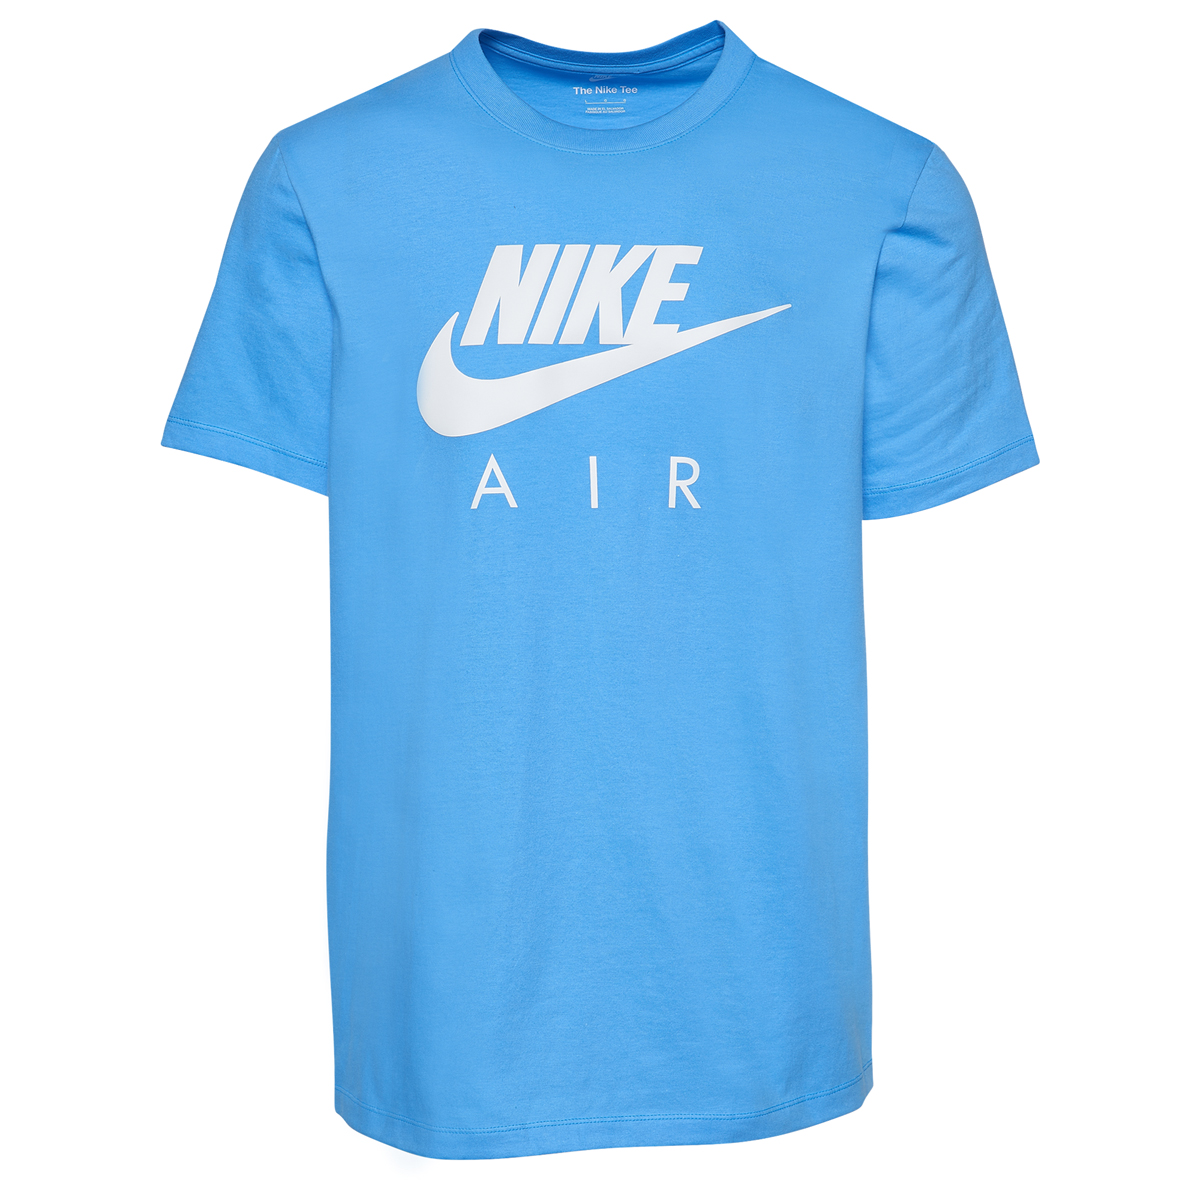 Nike Air Reflective T Shirt Carolina Blue